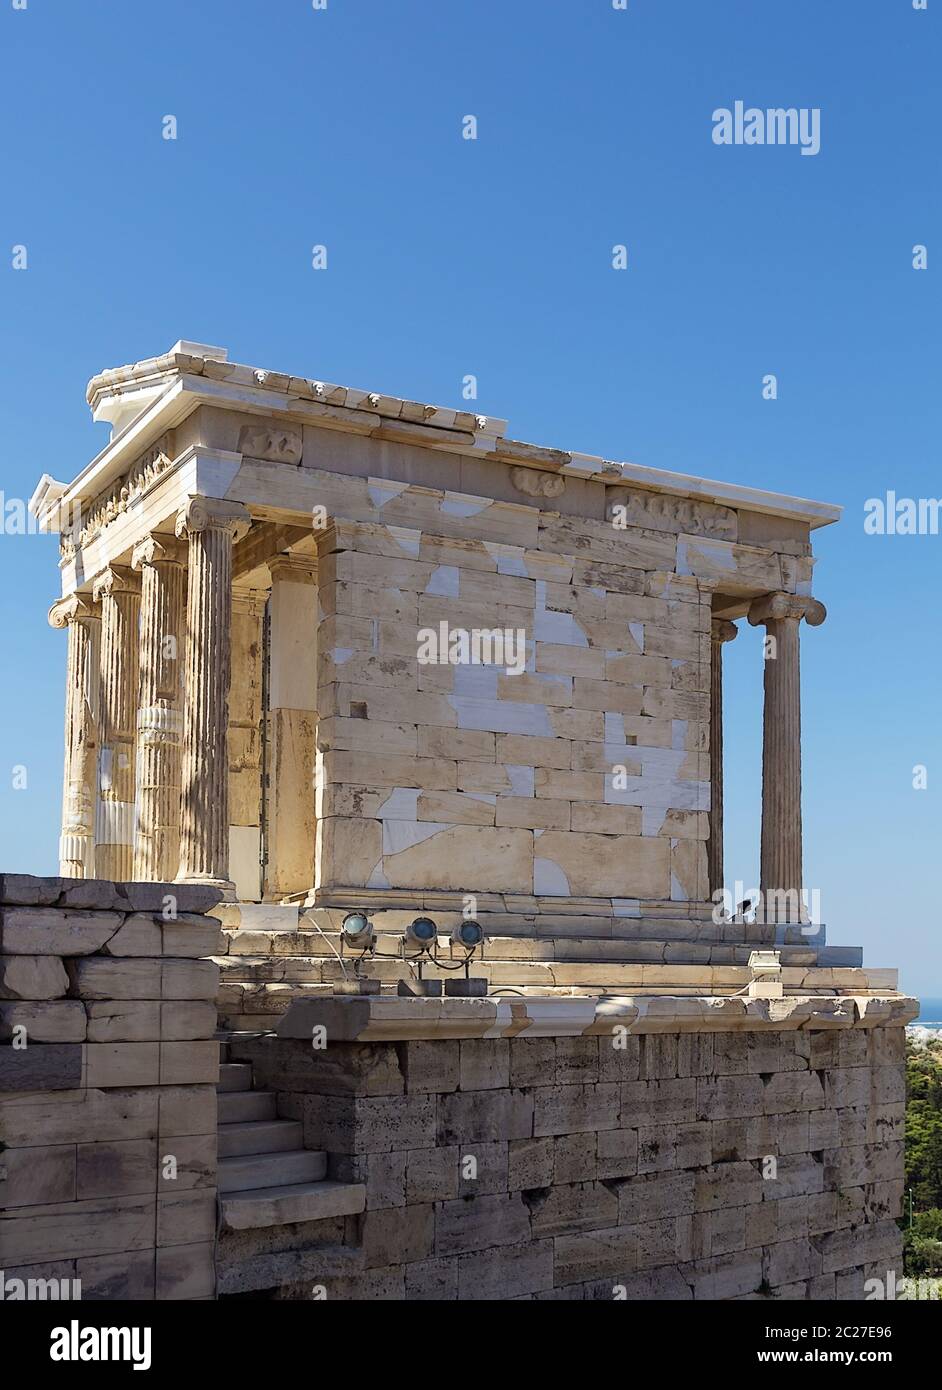 Temple of nike fotografías e imágenes de alta resolución - Alamy